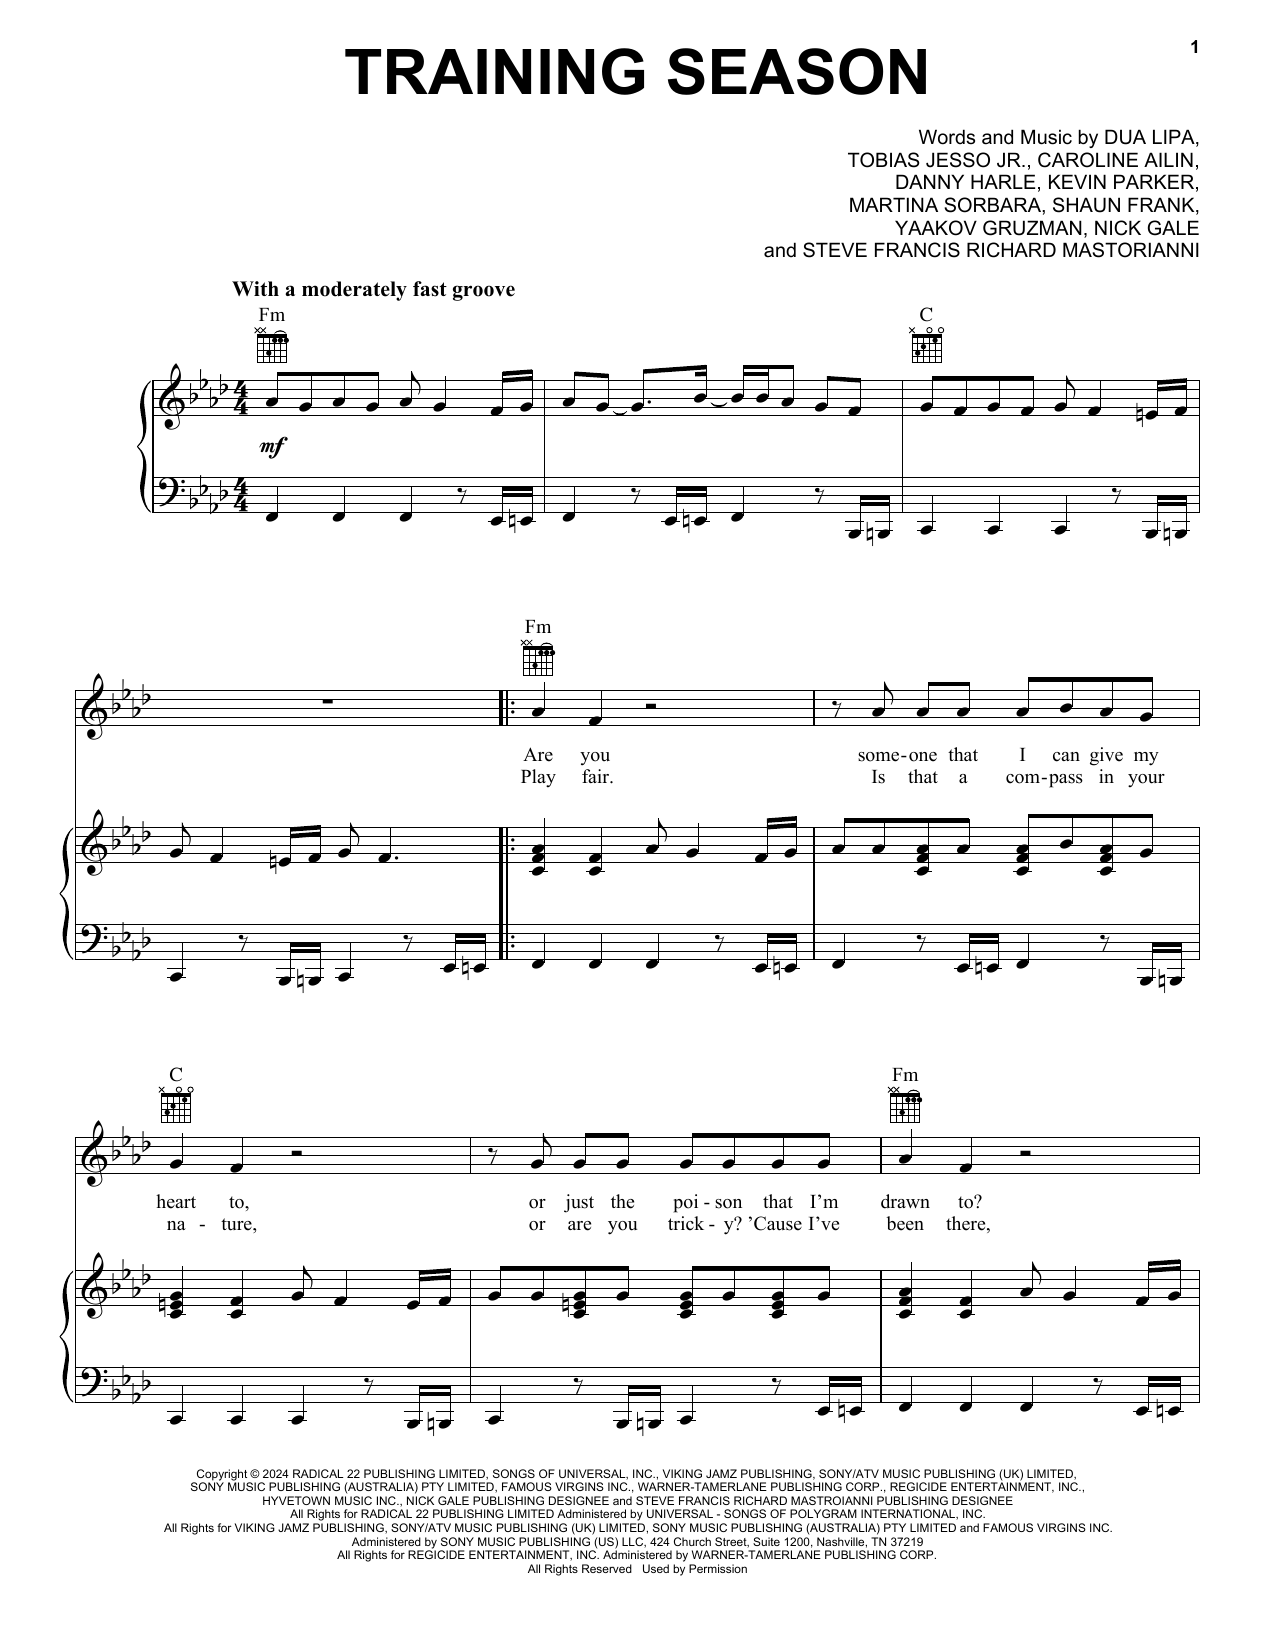 Dua Lipa Training Season Sheet Music Notes & Chords for Piano, Vocal & Guitar Chords (Right-Hand Melody) - Download or Print PDF